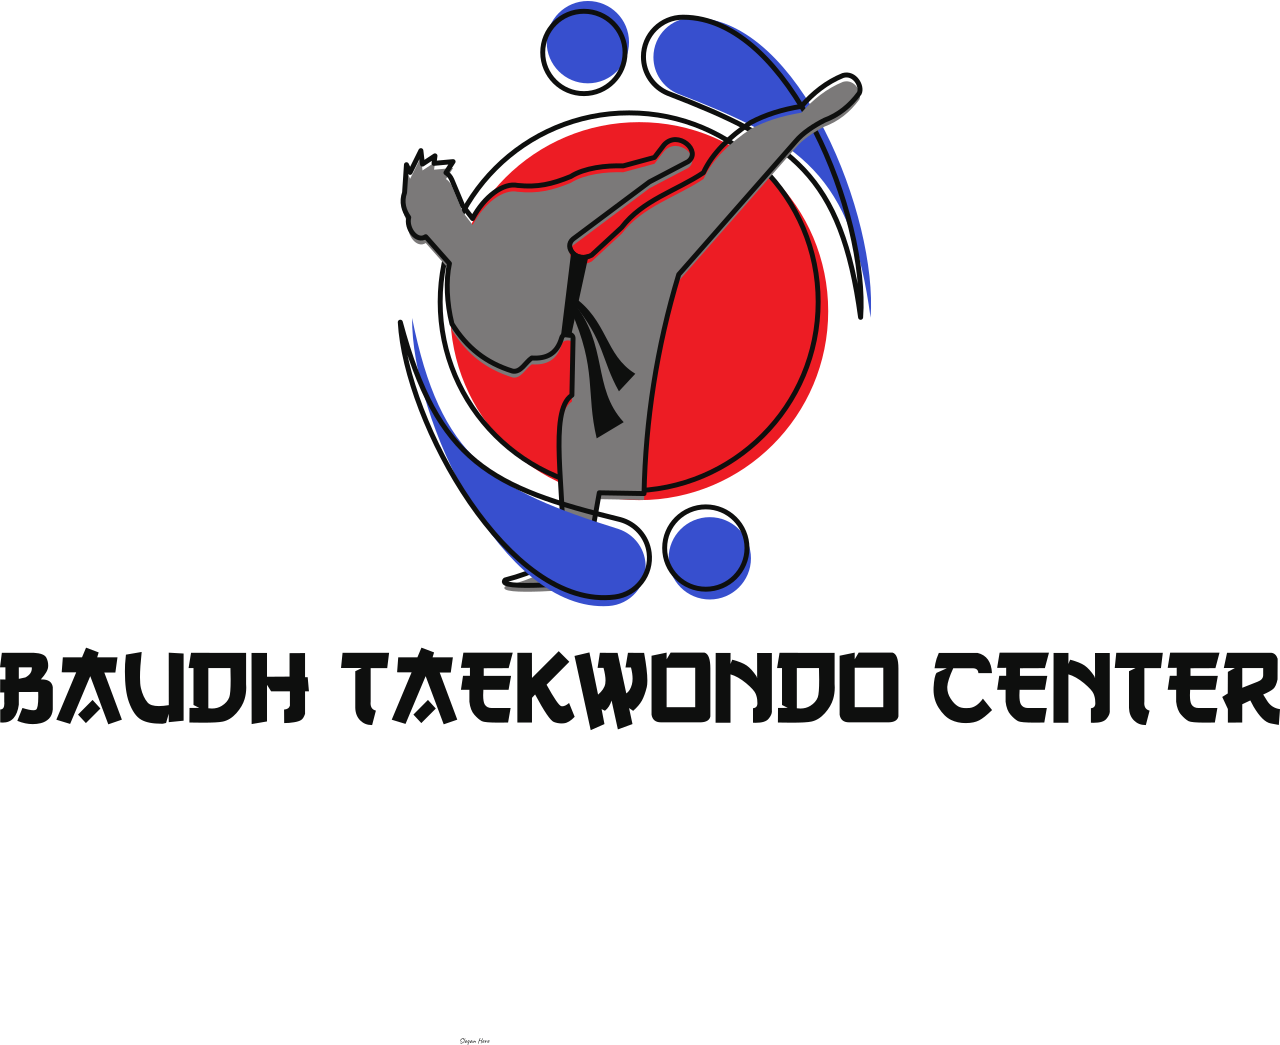 BAUDH TAEKWONDO CENTER 's web page